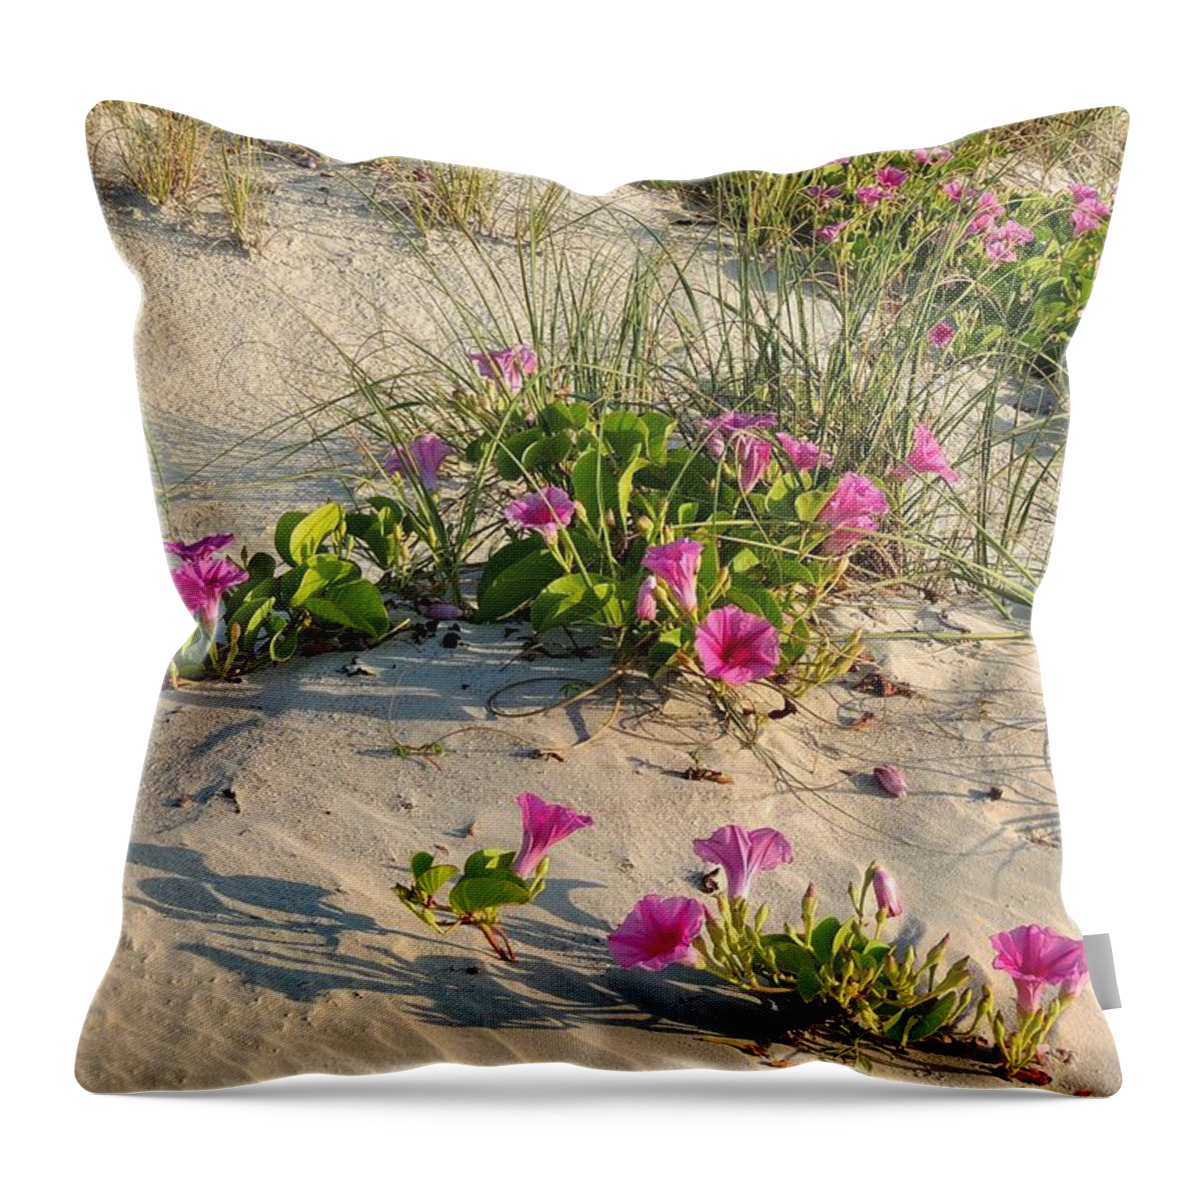 Morning Throw Pillow featuring the photograph Beach Decor by Gordon Beck